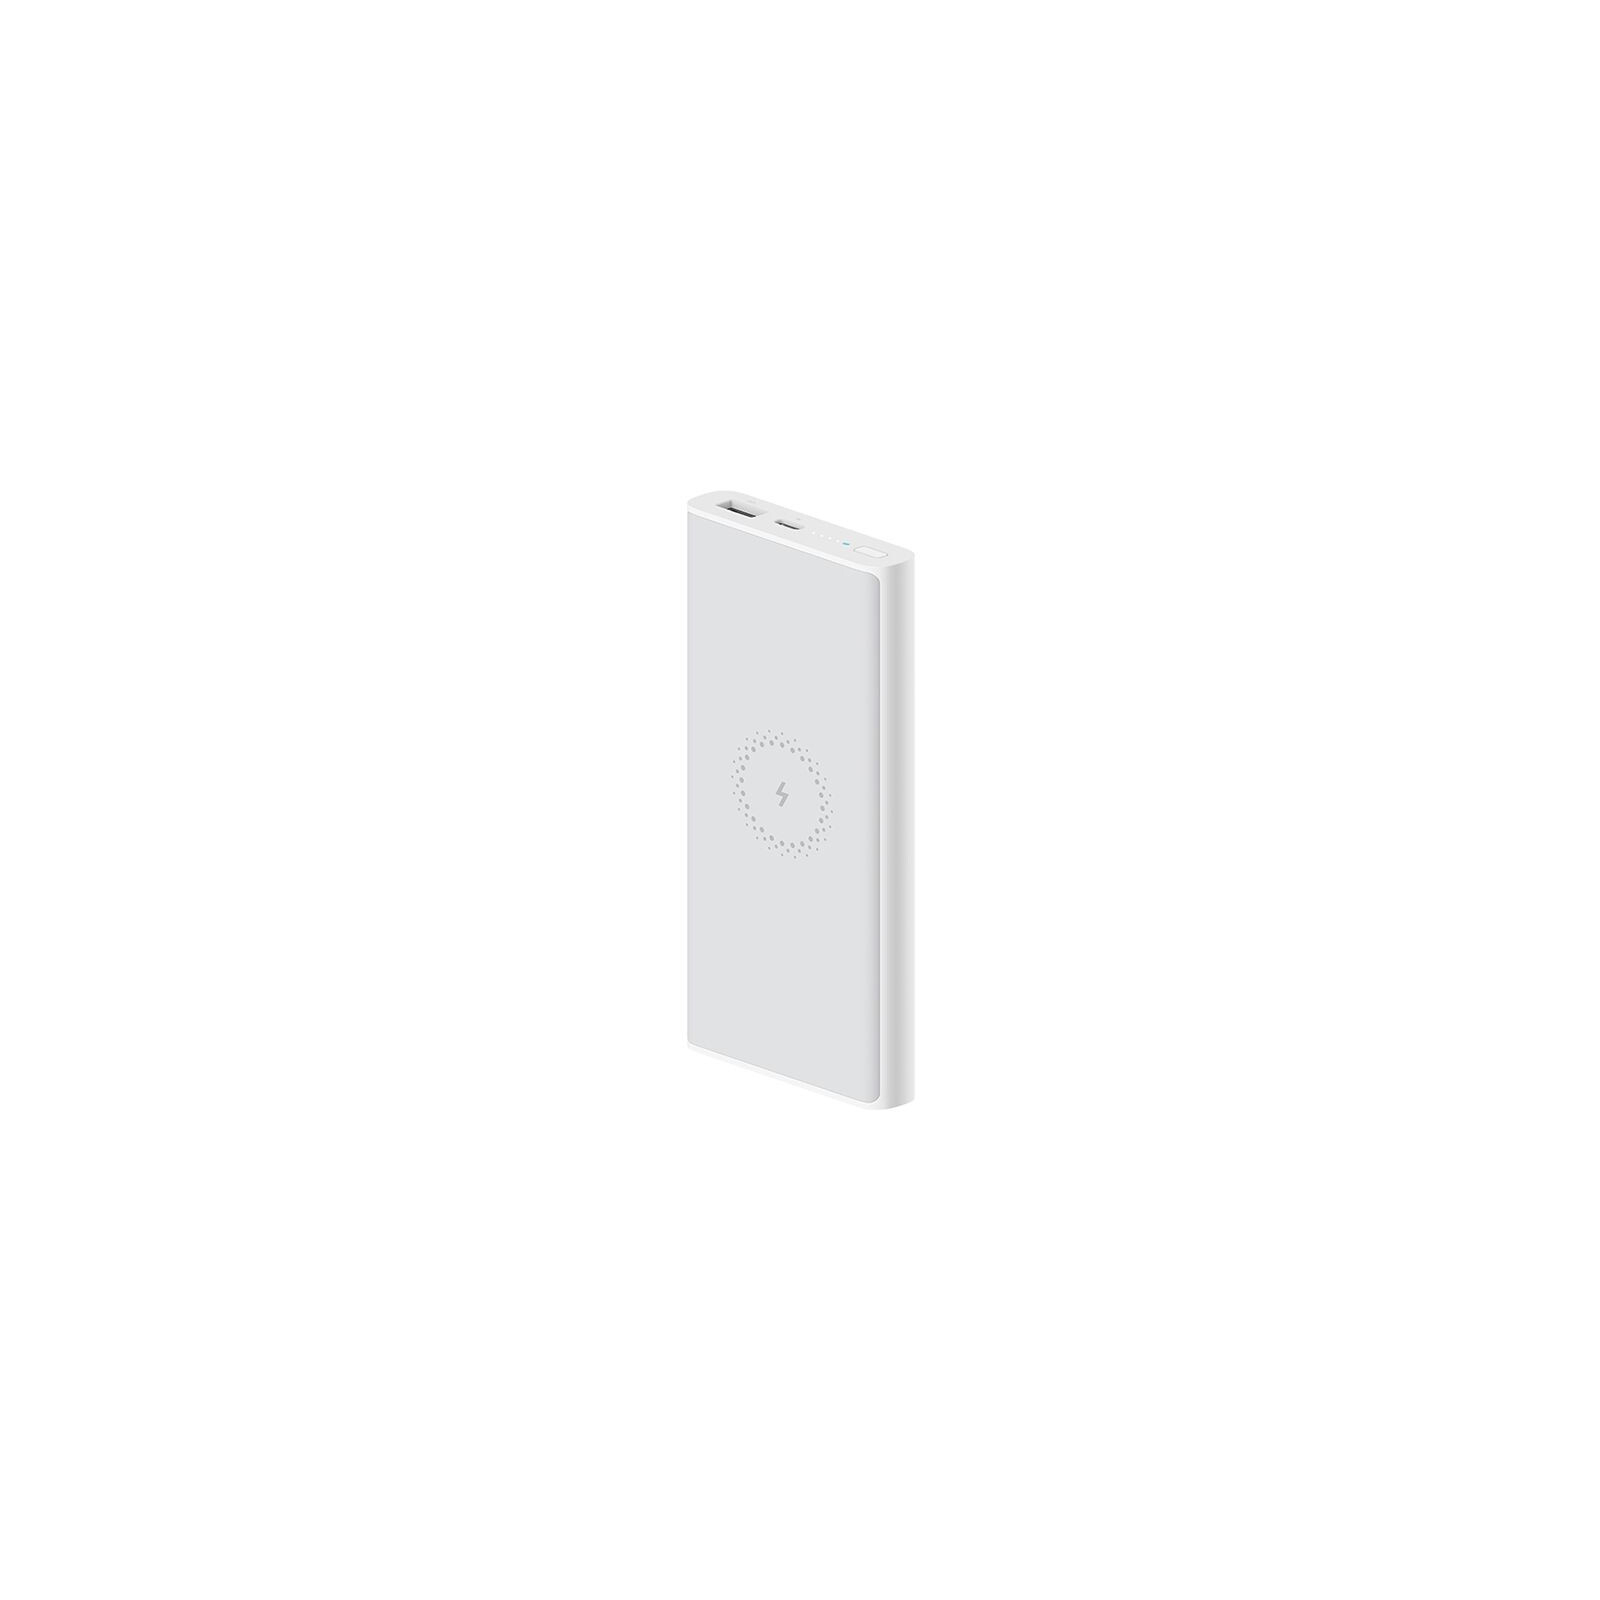 Батарея универсальная Xiaomi Mi Wireless Youth Edition 10000 mAh White (562530) изображение 2